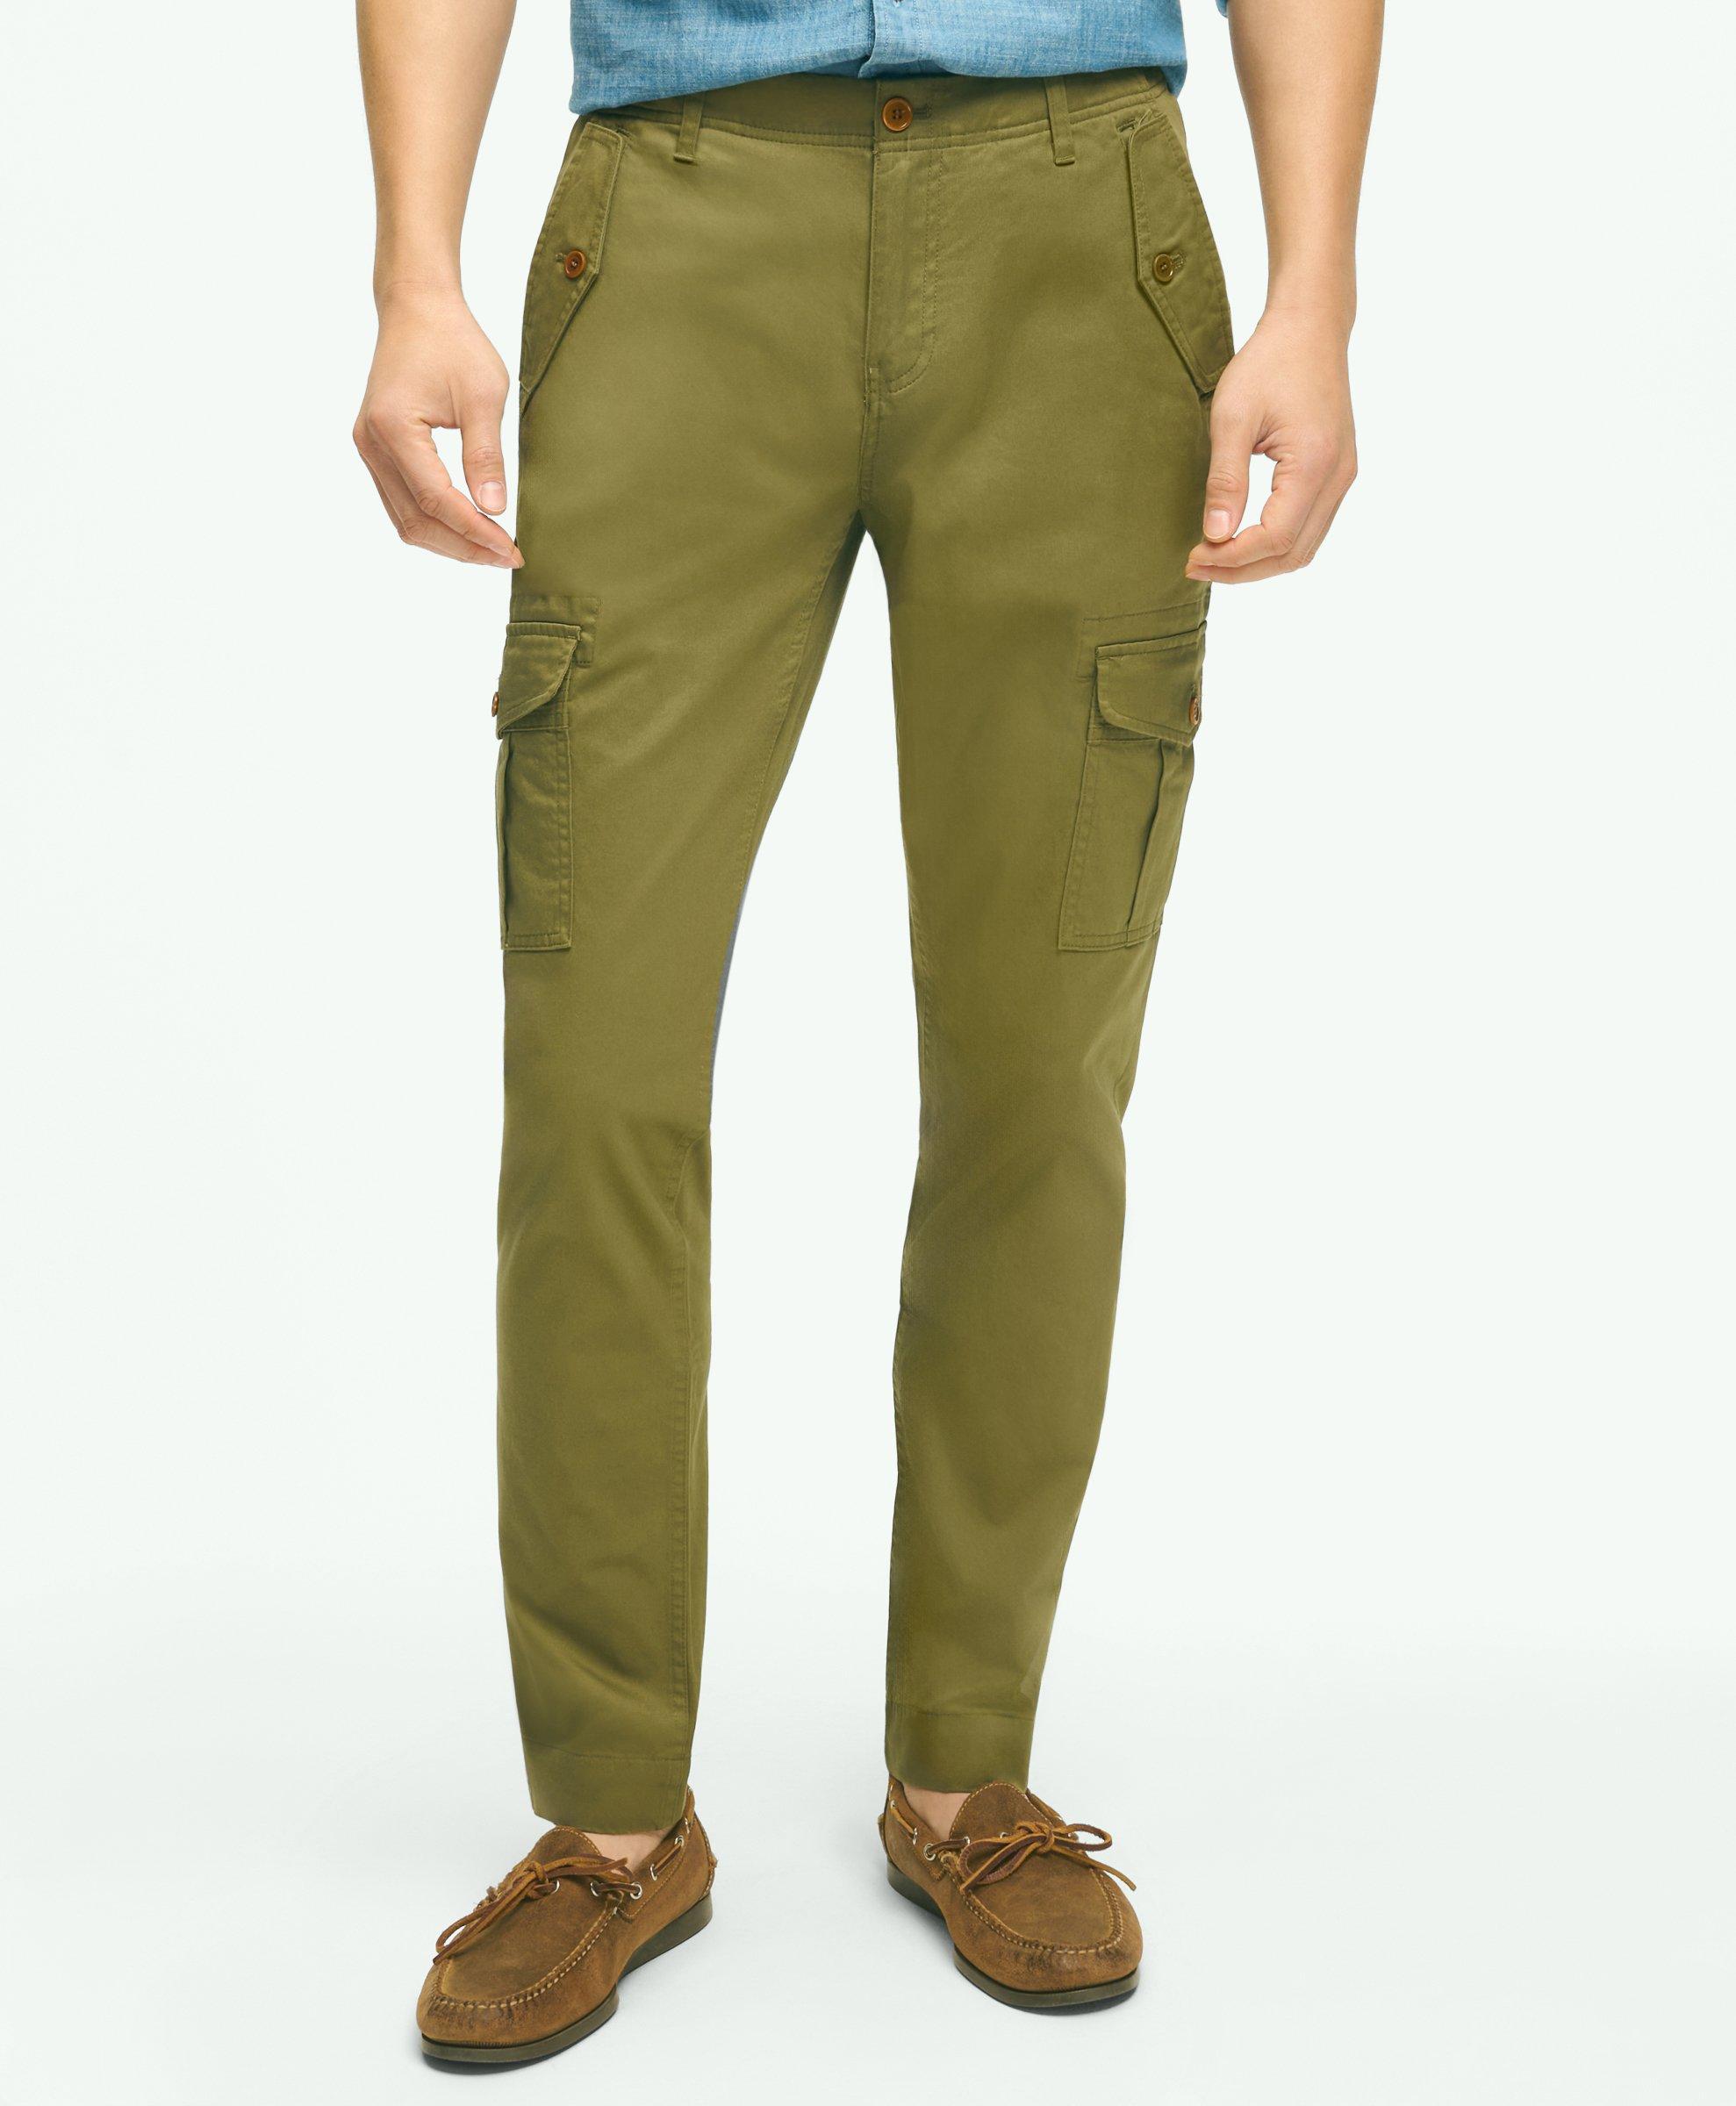 Bobbie Brooks Camo Multi Color Green Casual Pants Size XL - 56% off